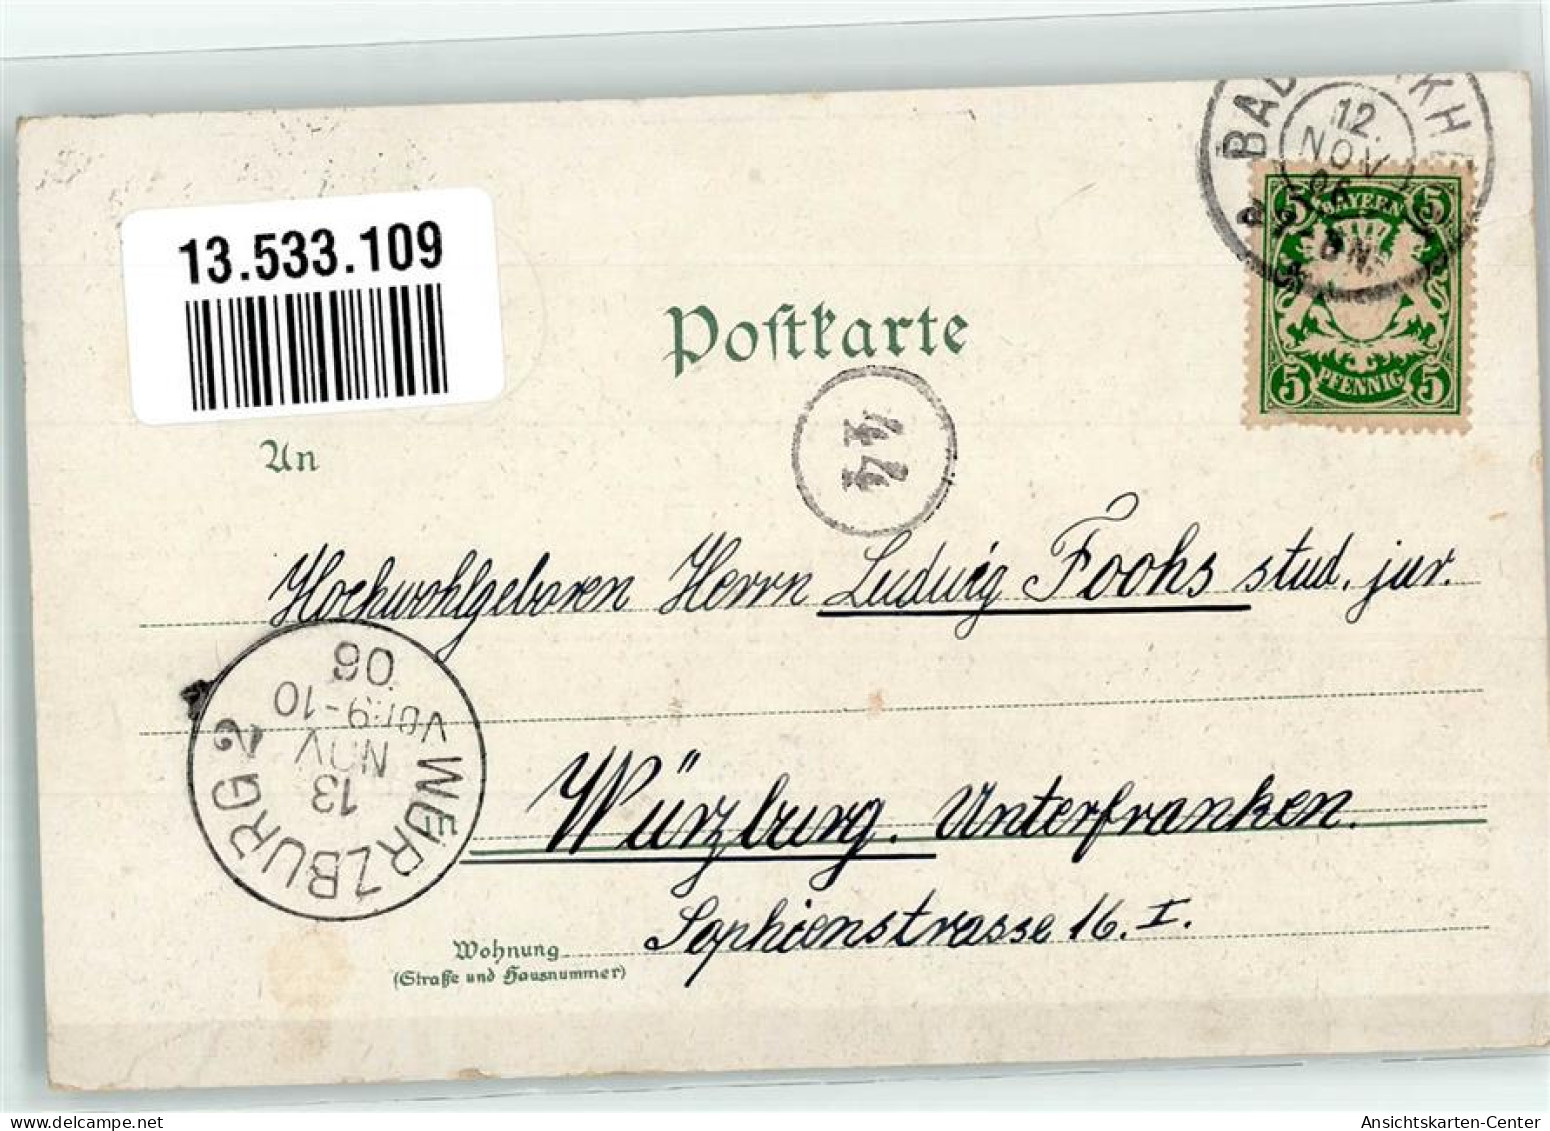 13533109 - Bad Duerkheim - Bad Duerkheim